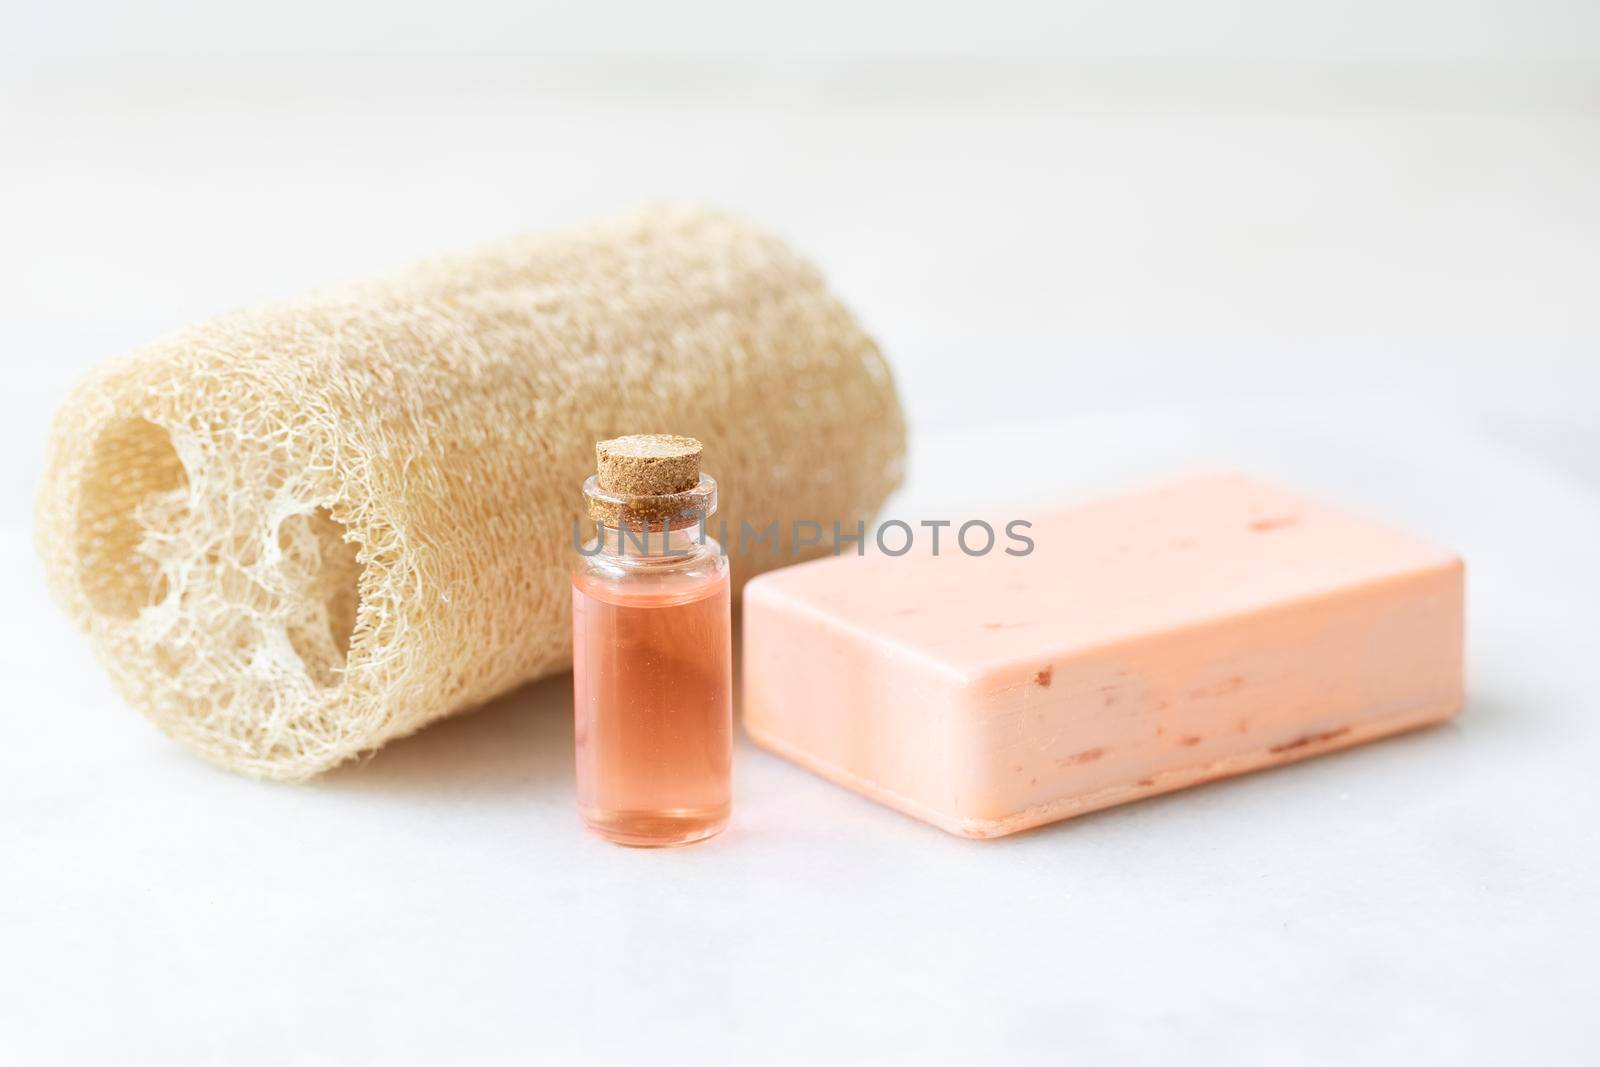 Fruit Extract Soap and Sponge by charlotteLake